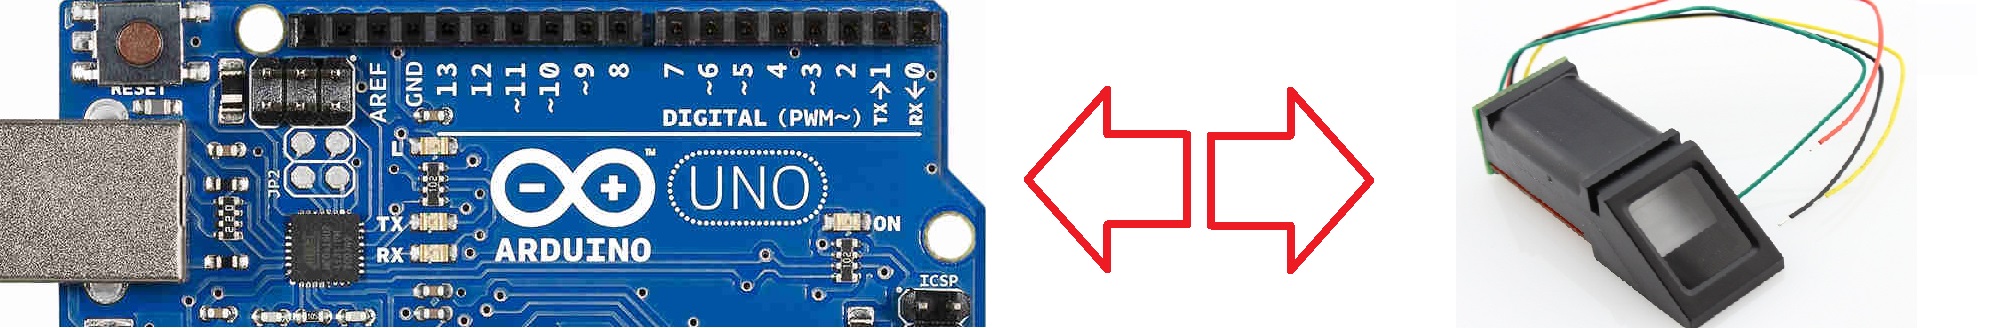 Arduino UNO based fingerprint sensor interface